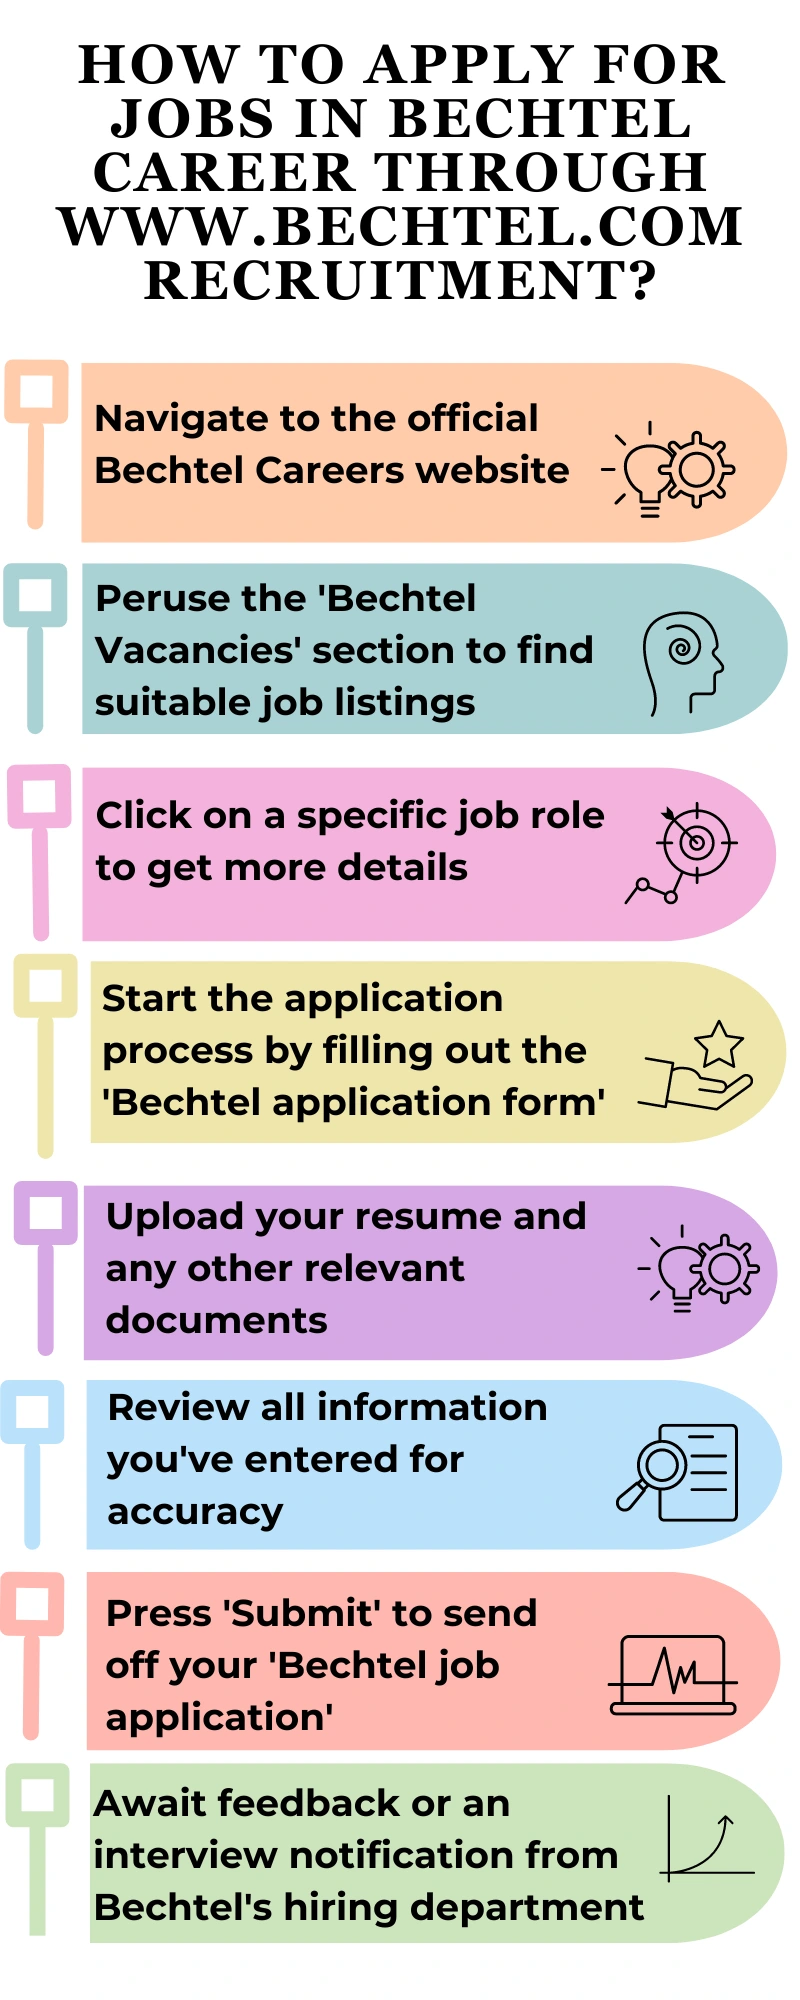 How to Apply for Jobs in Bechtel Career through www.bechtel.com recruitment?